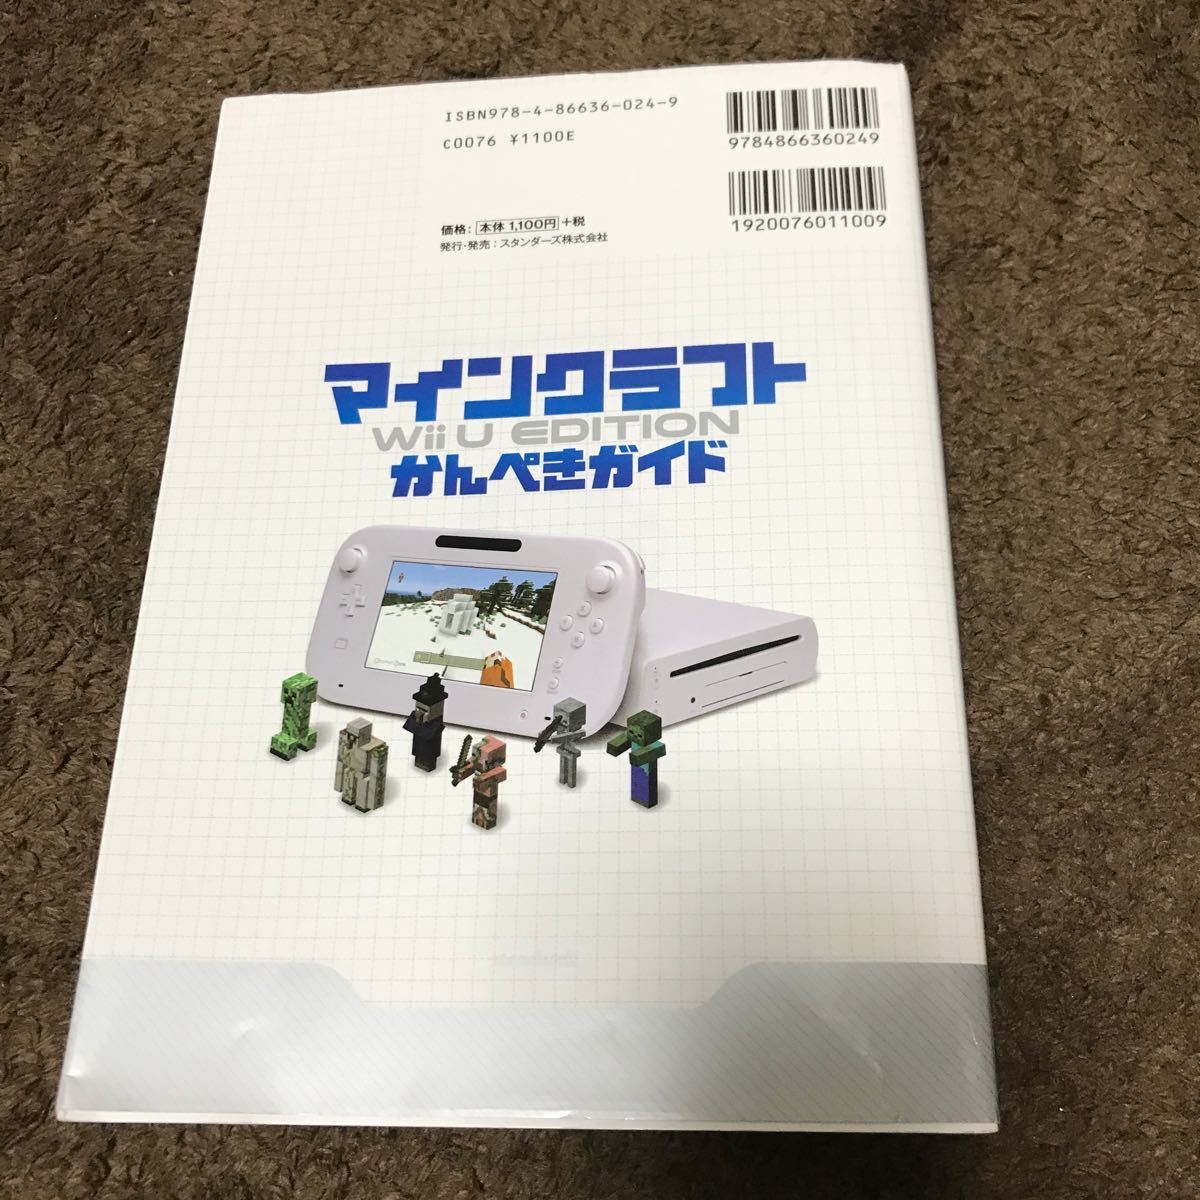 Paypayフリマ 中古攻略本 Wiiu マインクラフト Wii U Edition かんぺきガイド